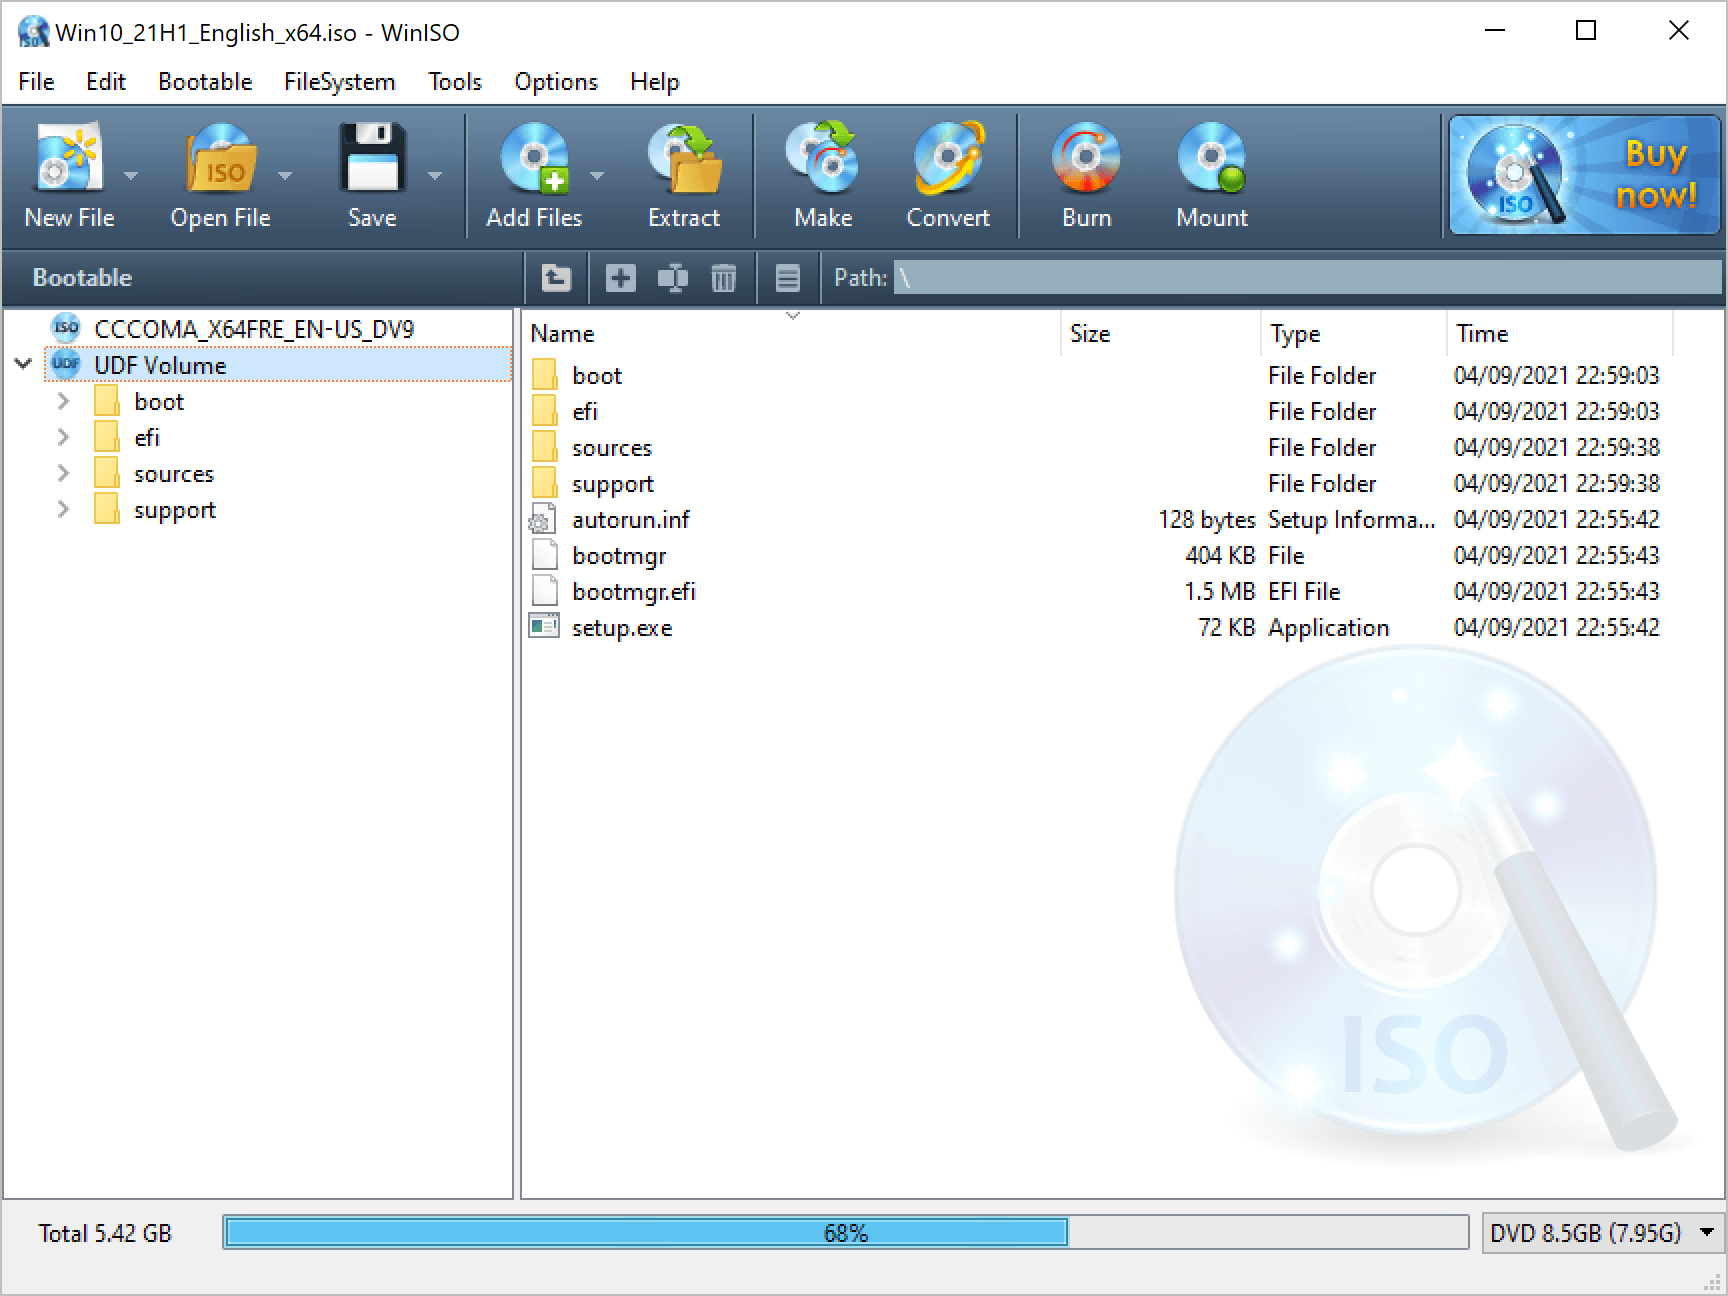 WinISO 6 - Main Window - Windows 10